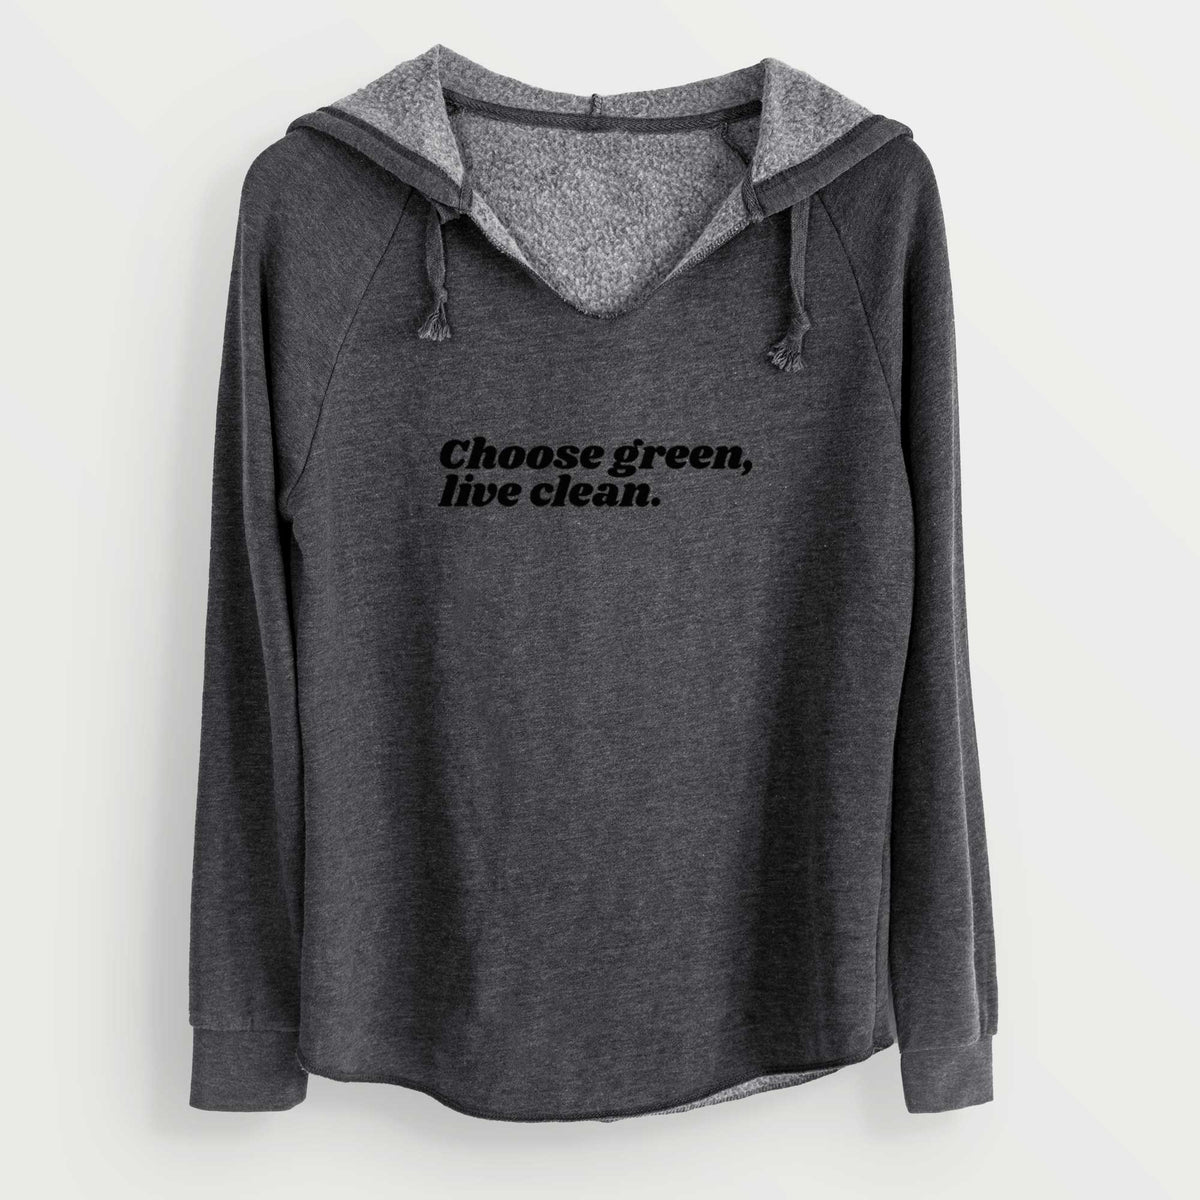 Choose Green, Live Clean - Cali Wave Hooded Sweatshirt